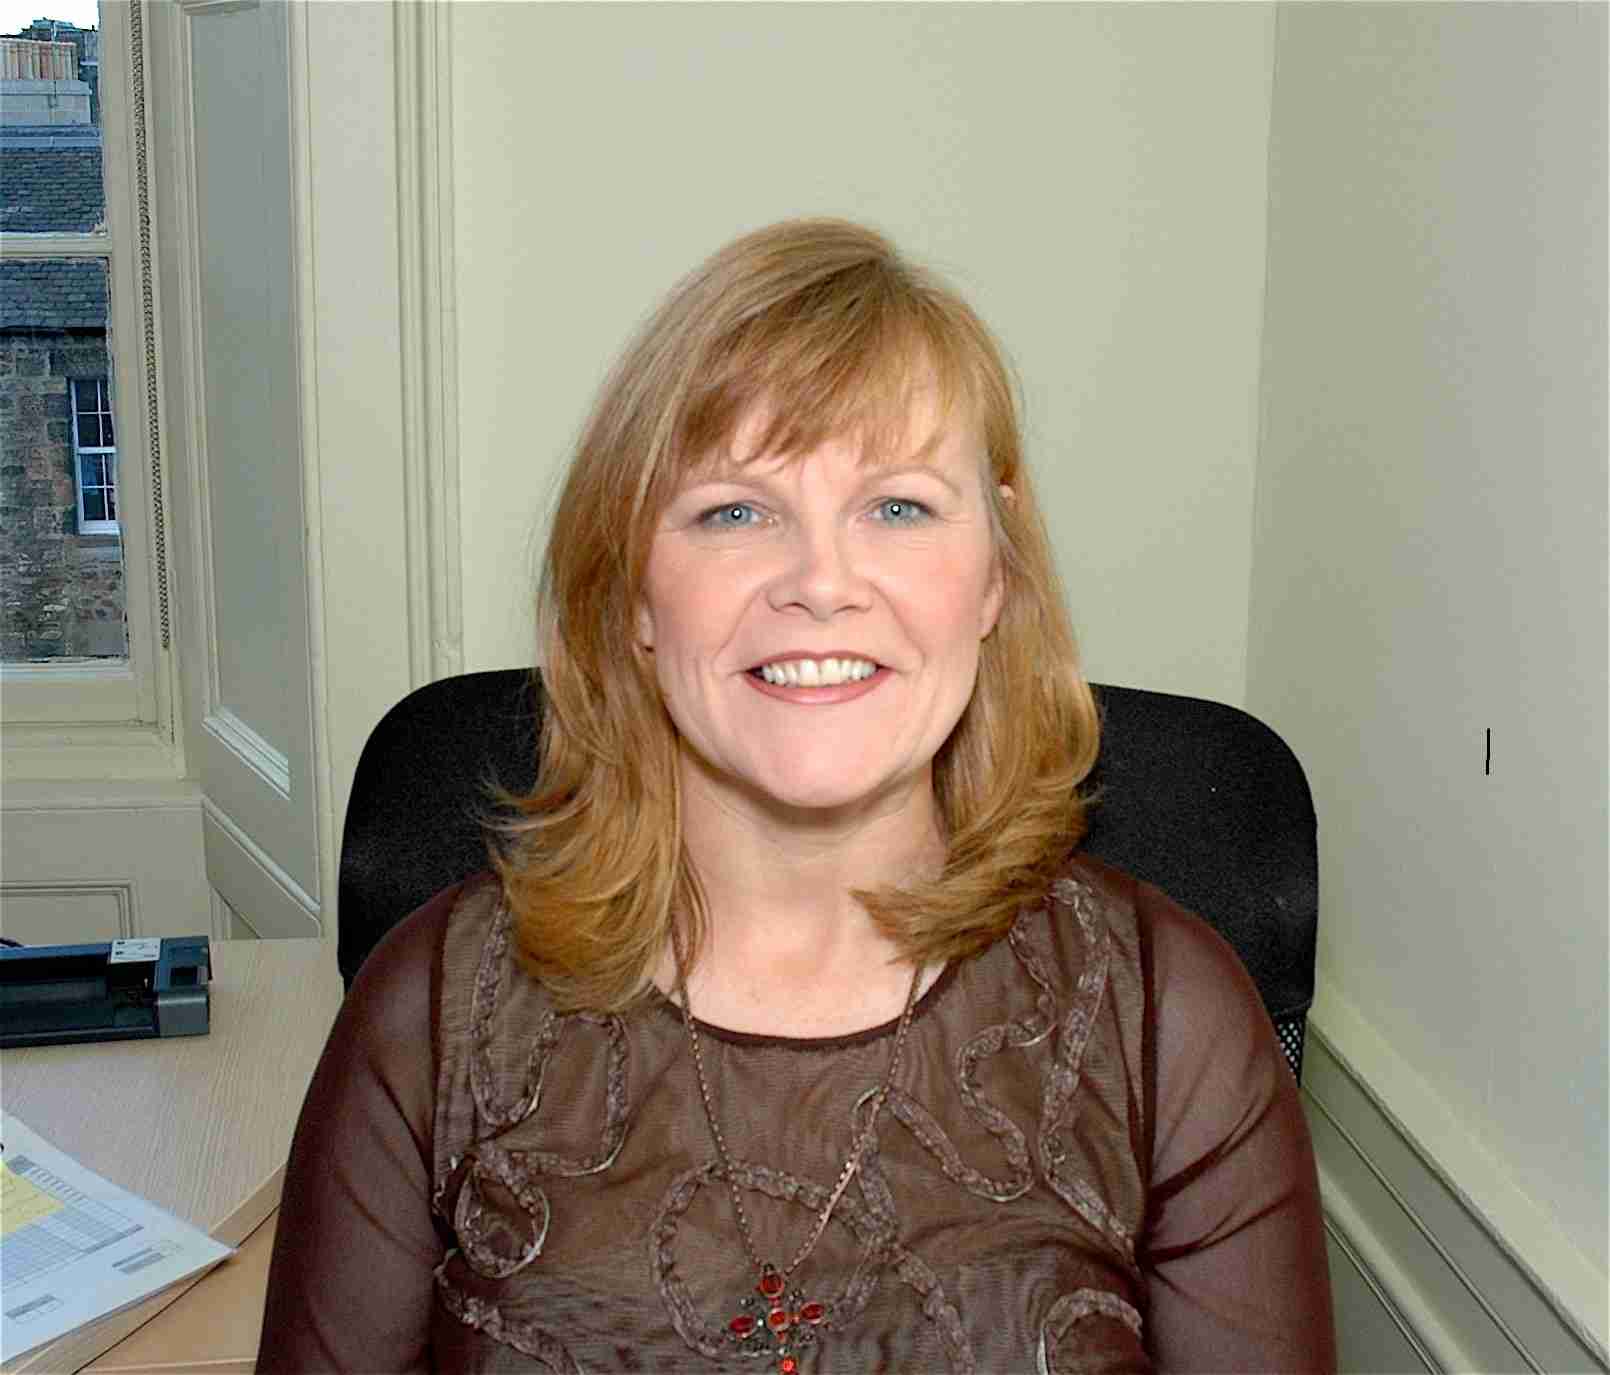 Profile image of Dr Barbara McCrory